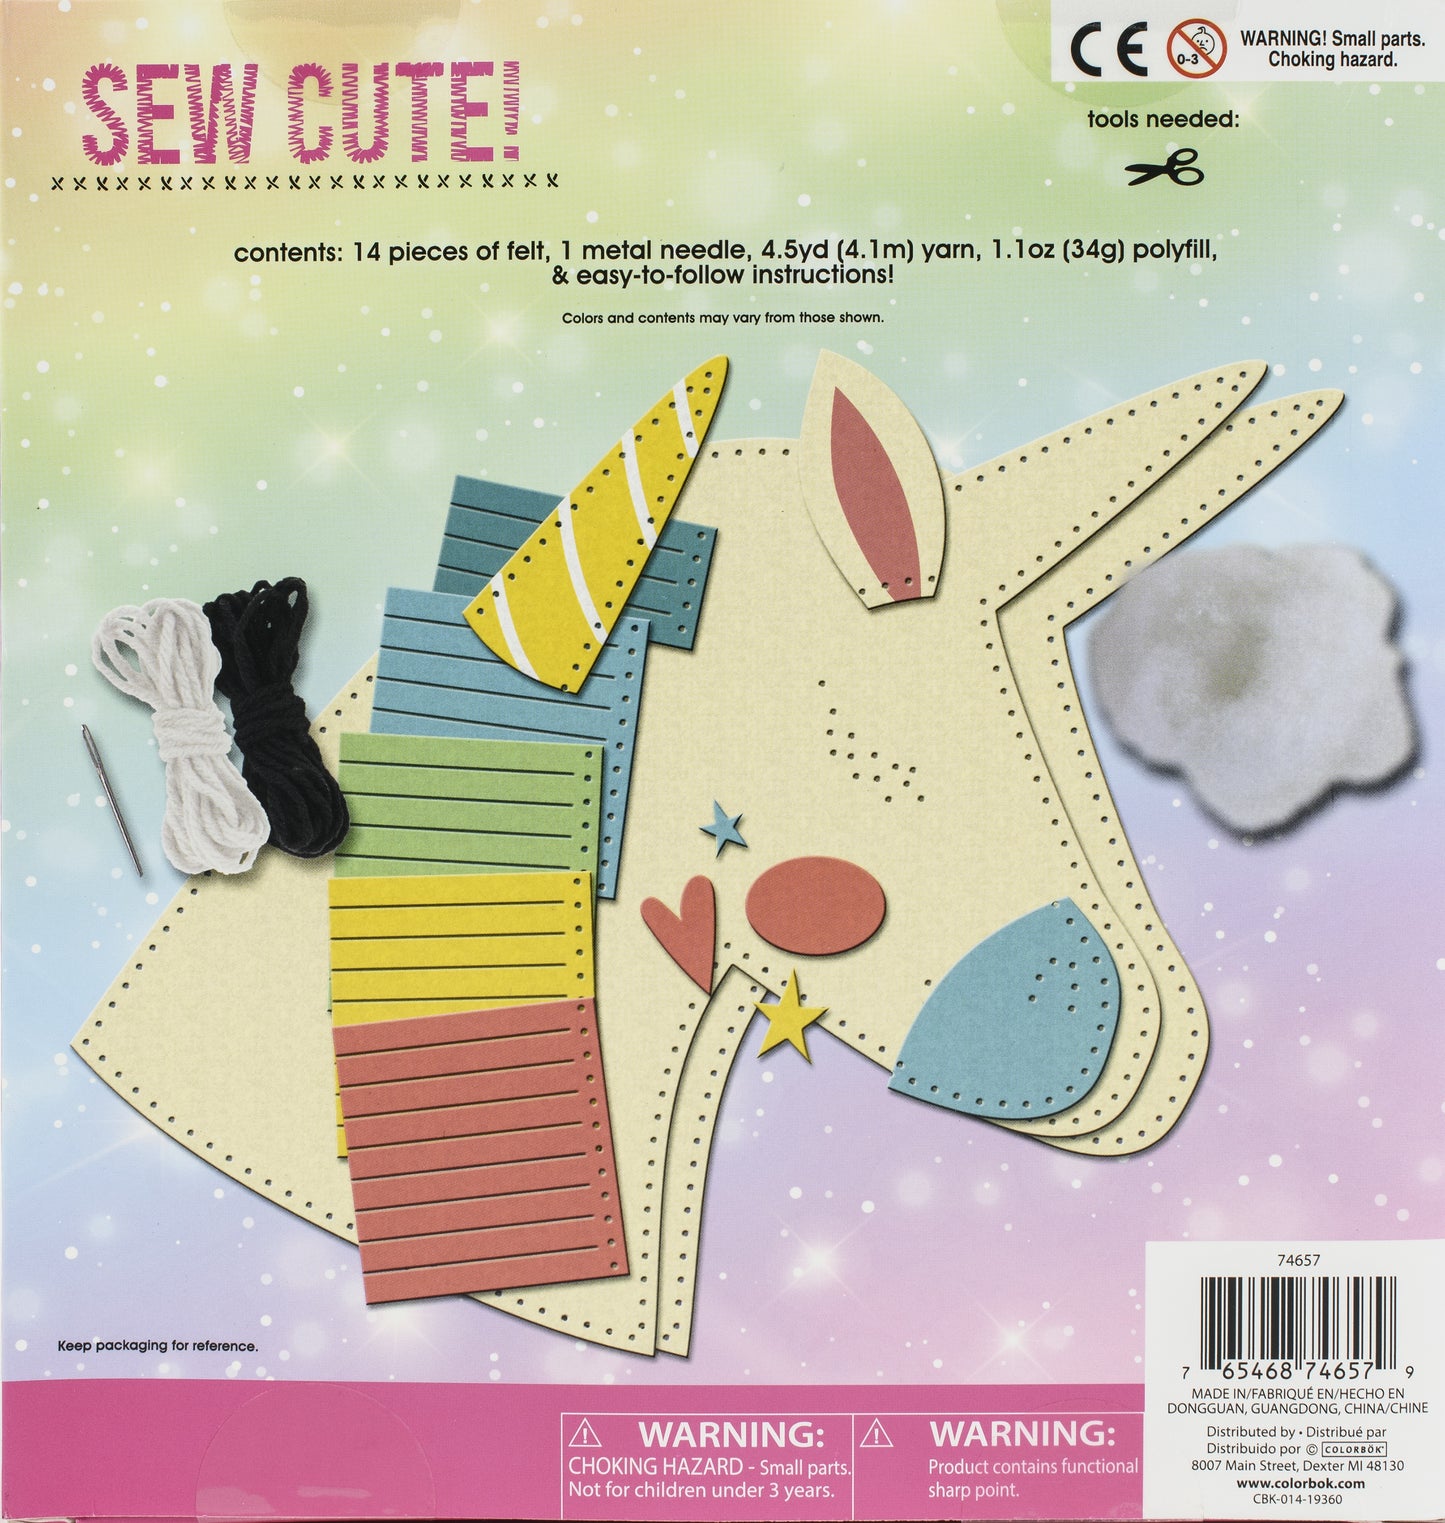 Sew Cute! Felt Pillow Kit-Unicorn